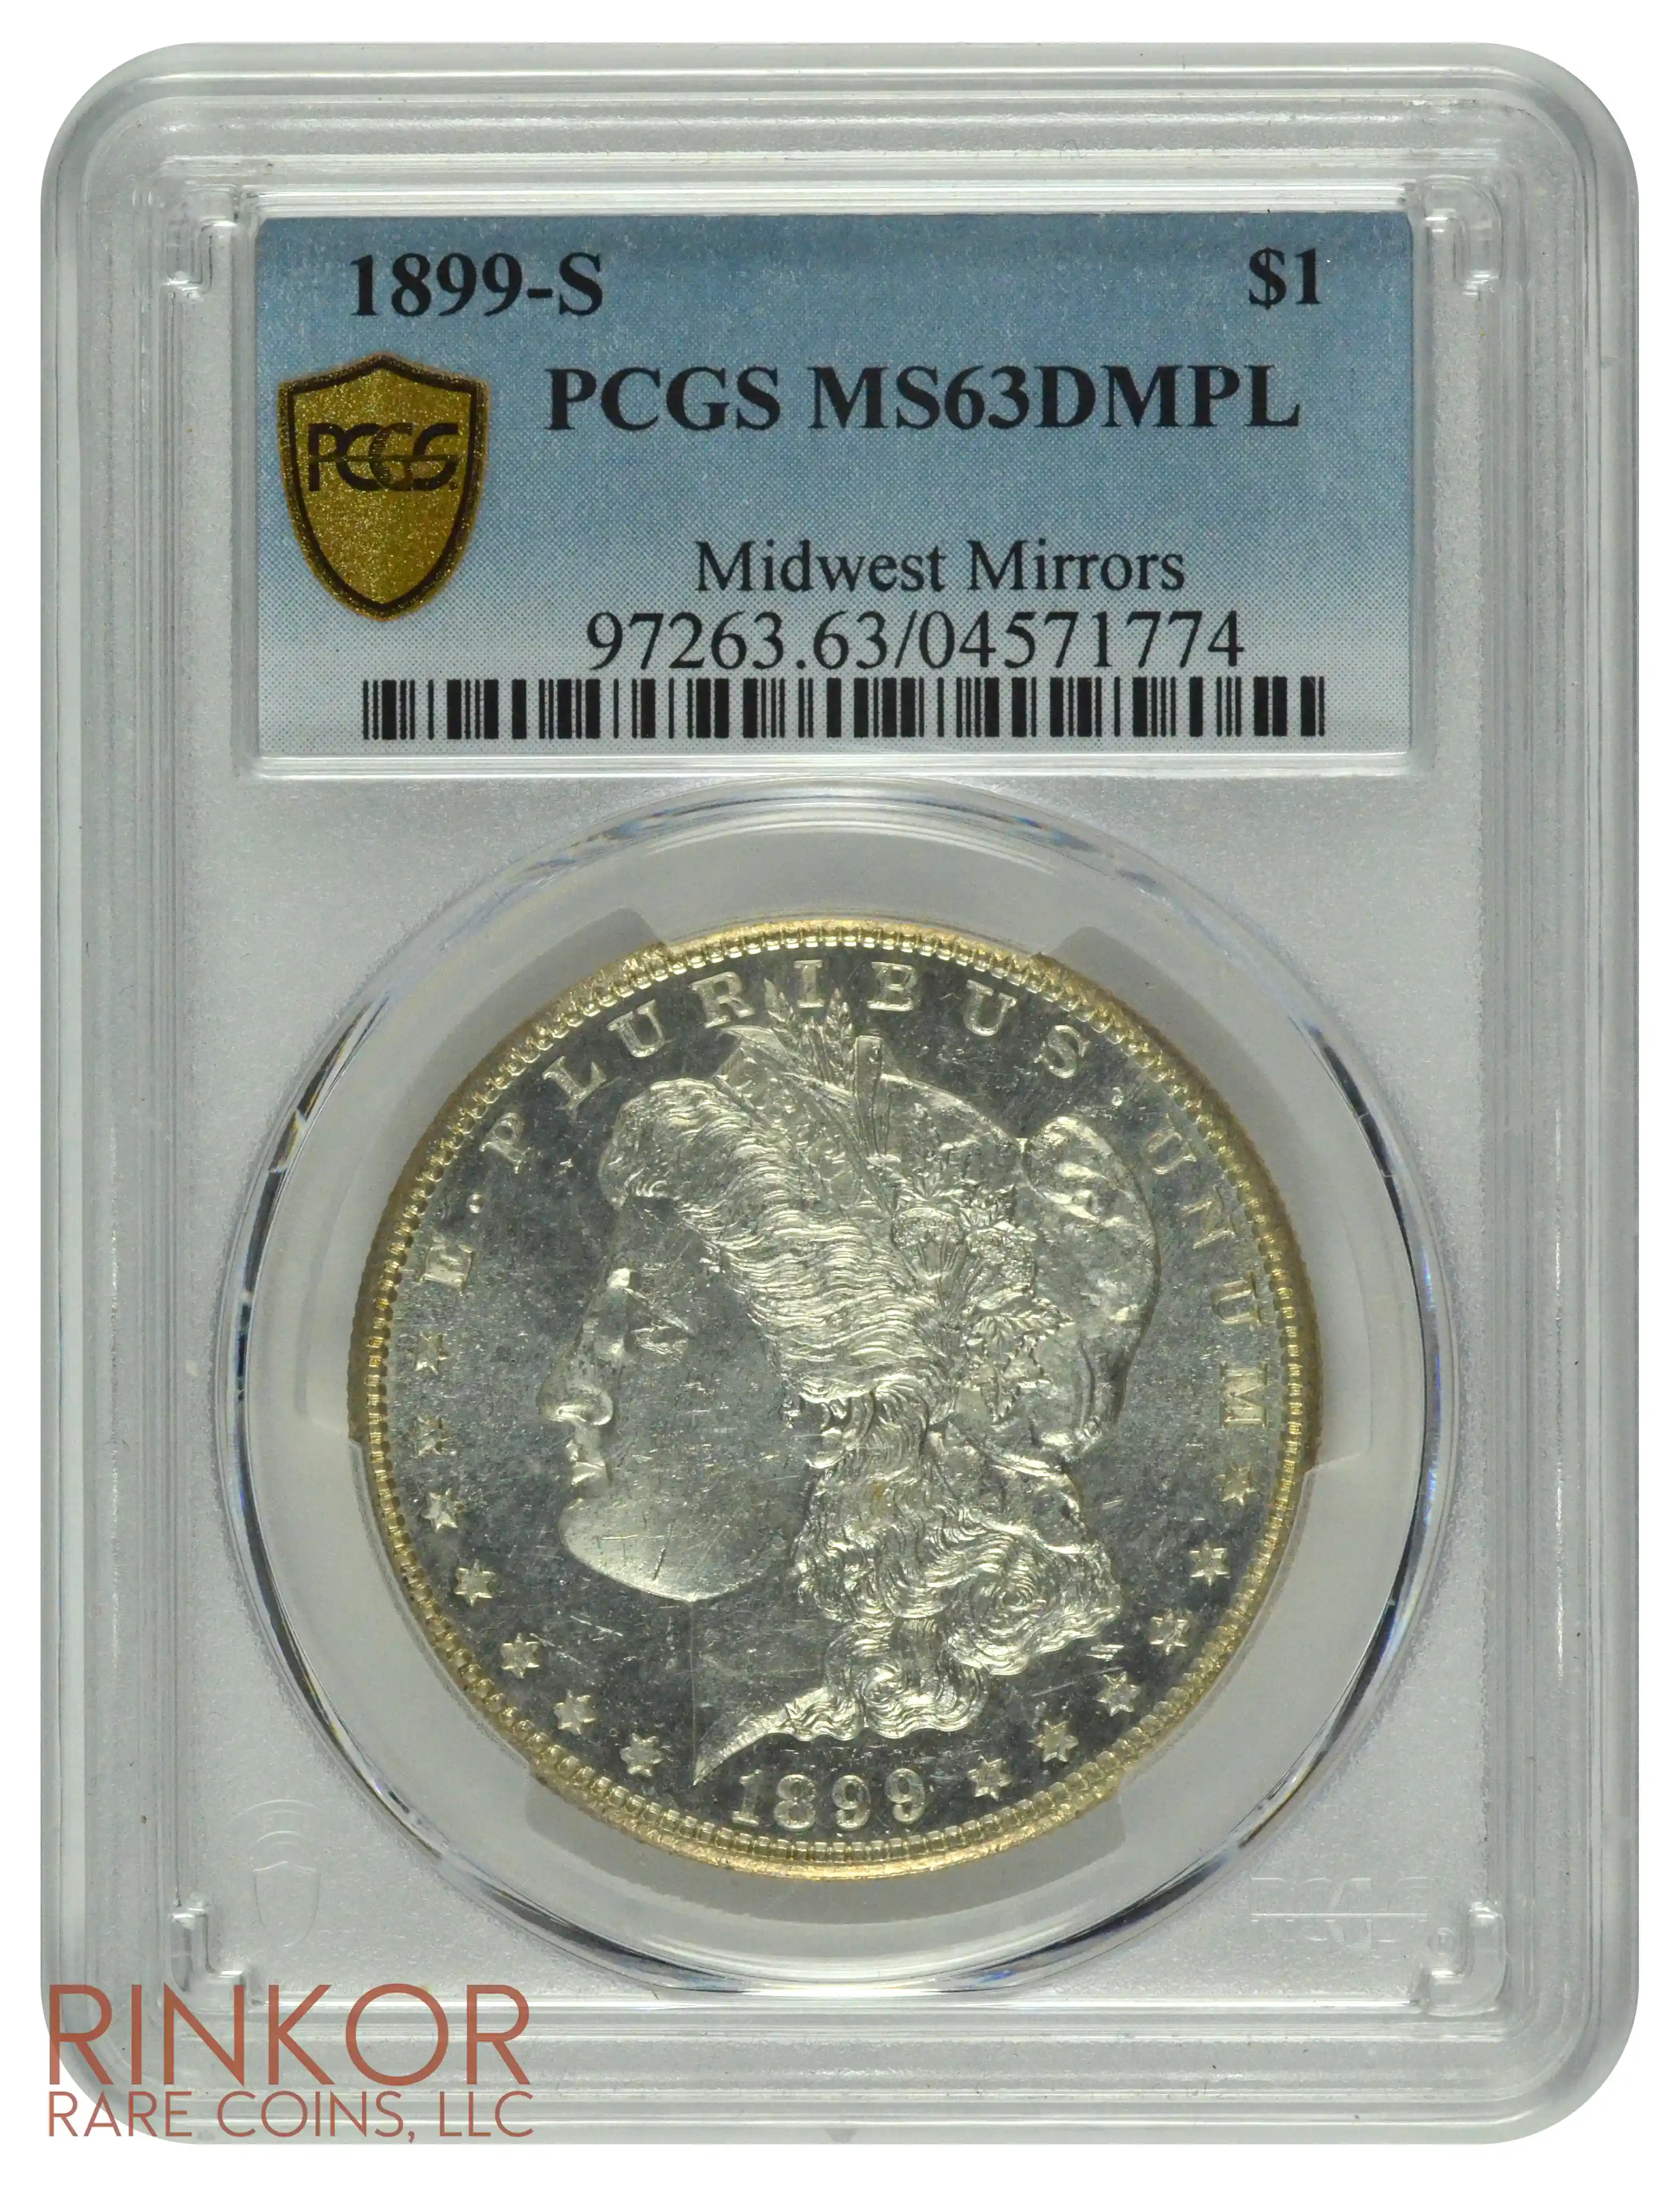 1899-S $1 PCGS MS 63 DMPL